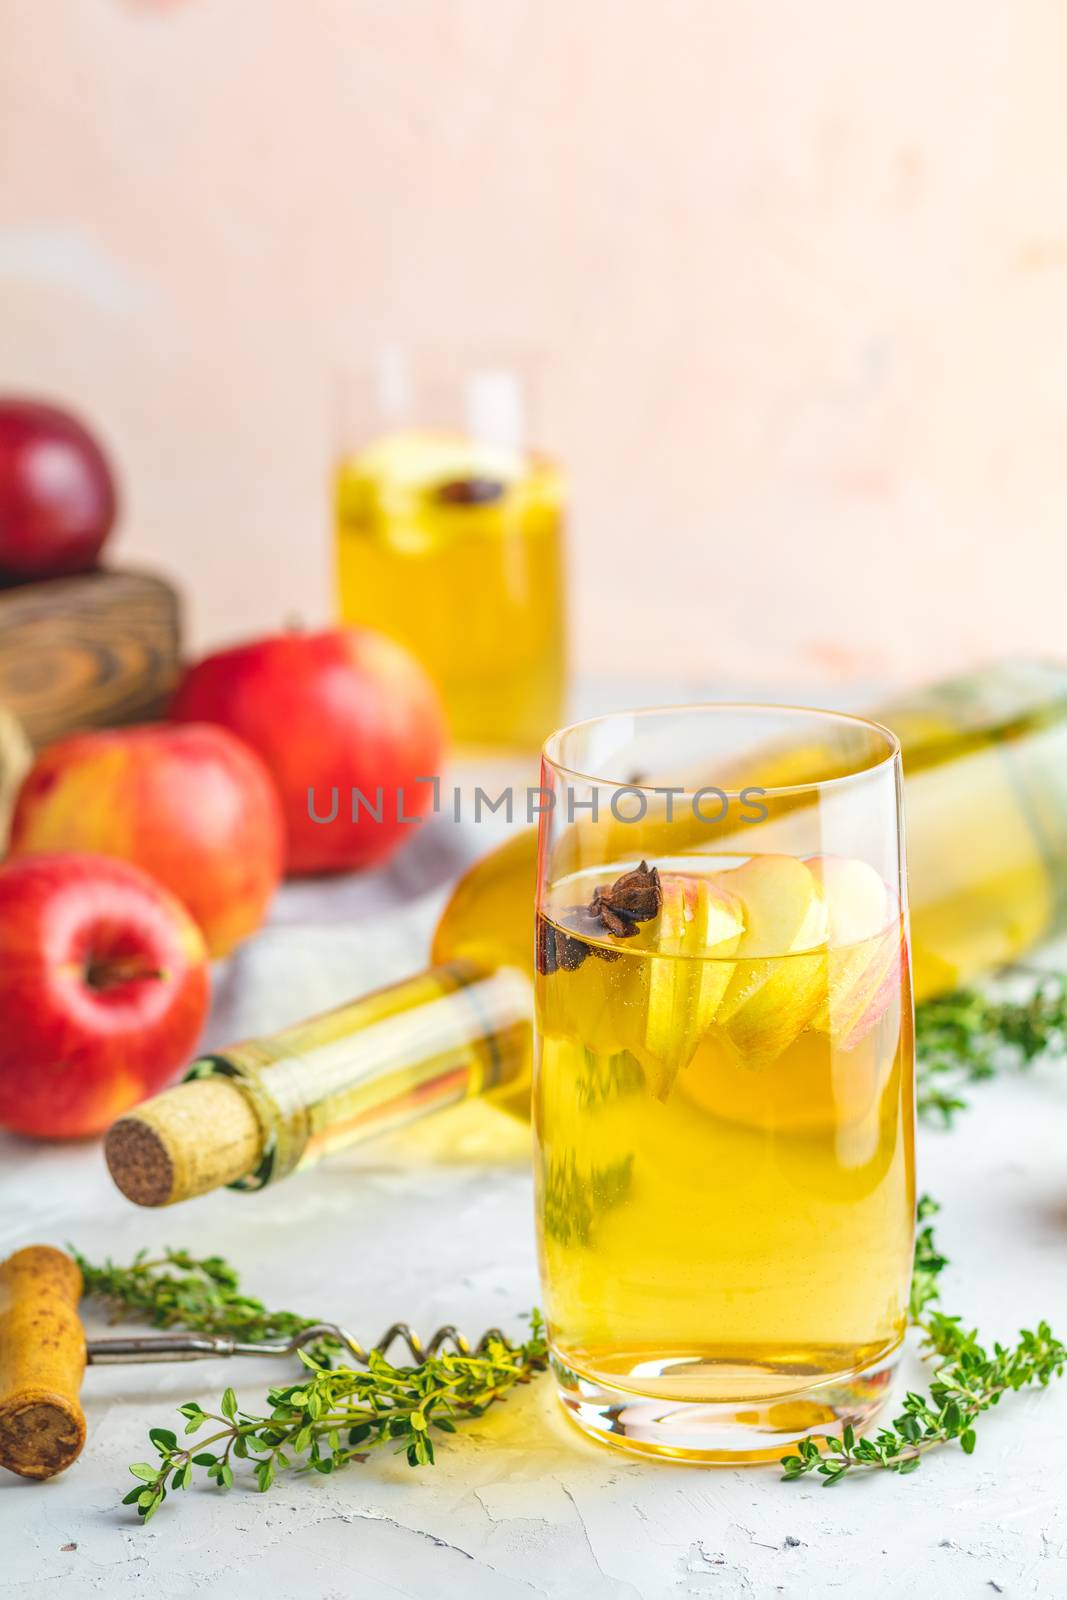 Bottle and glasses of homemade organic apple cider by ArtSvitlyna